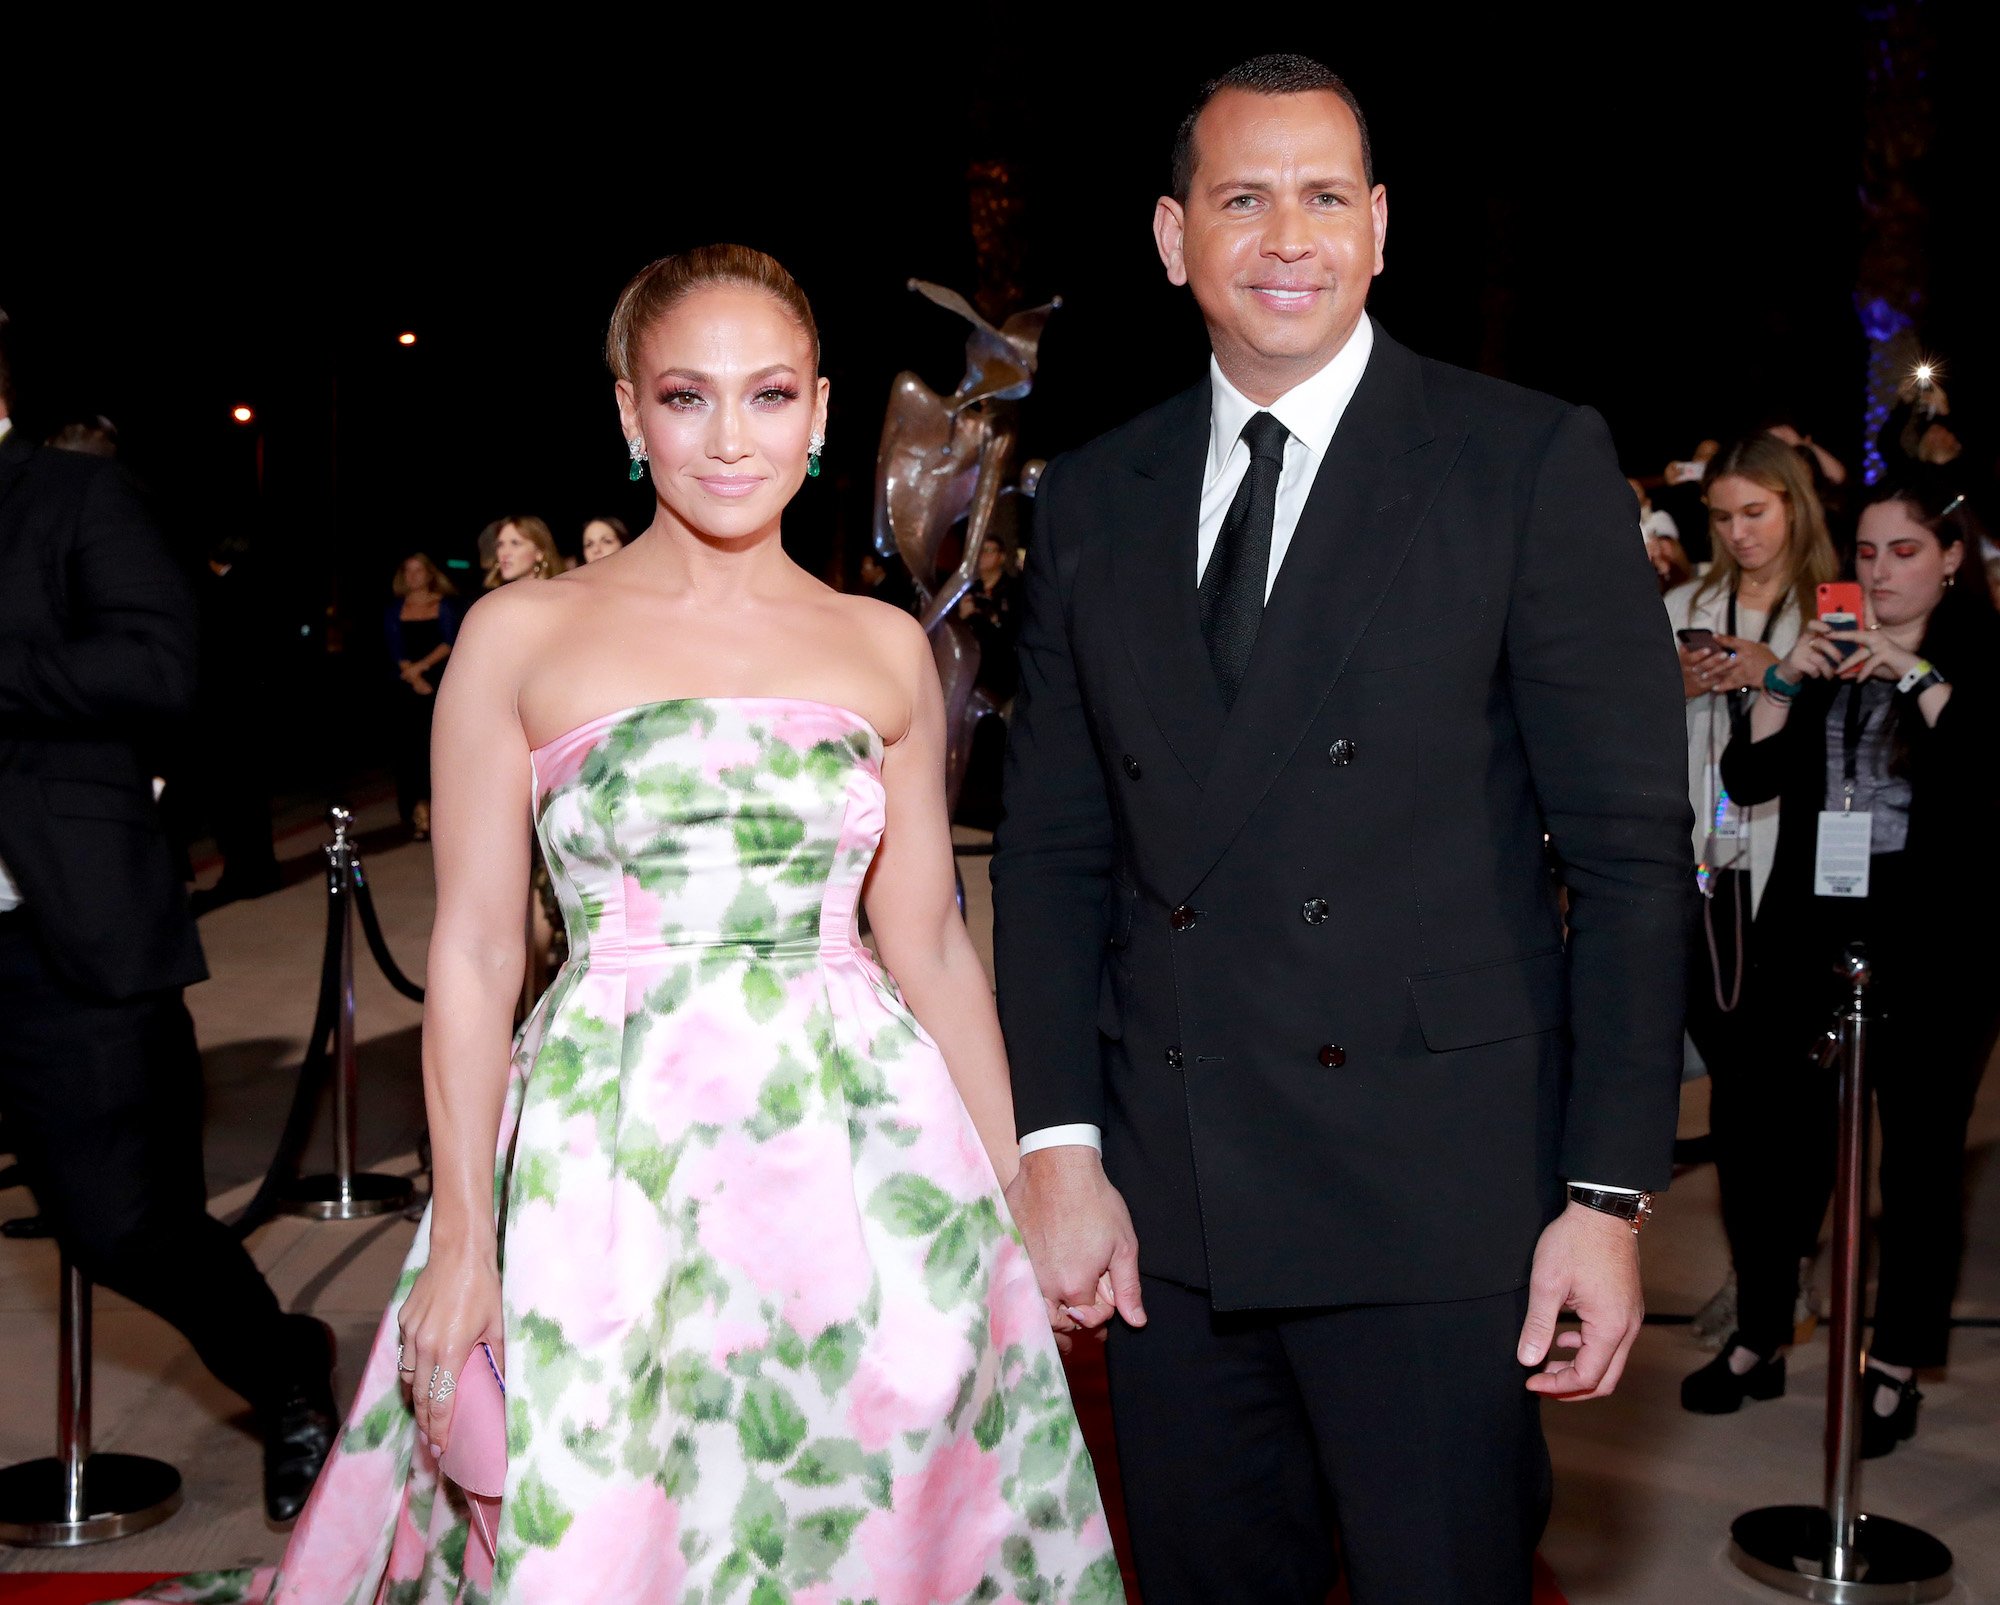 Jennifer Lopez and Alex Rodriguez attending the 31st Annual Palm Springs International Film Festival Film Awards Gala